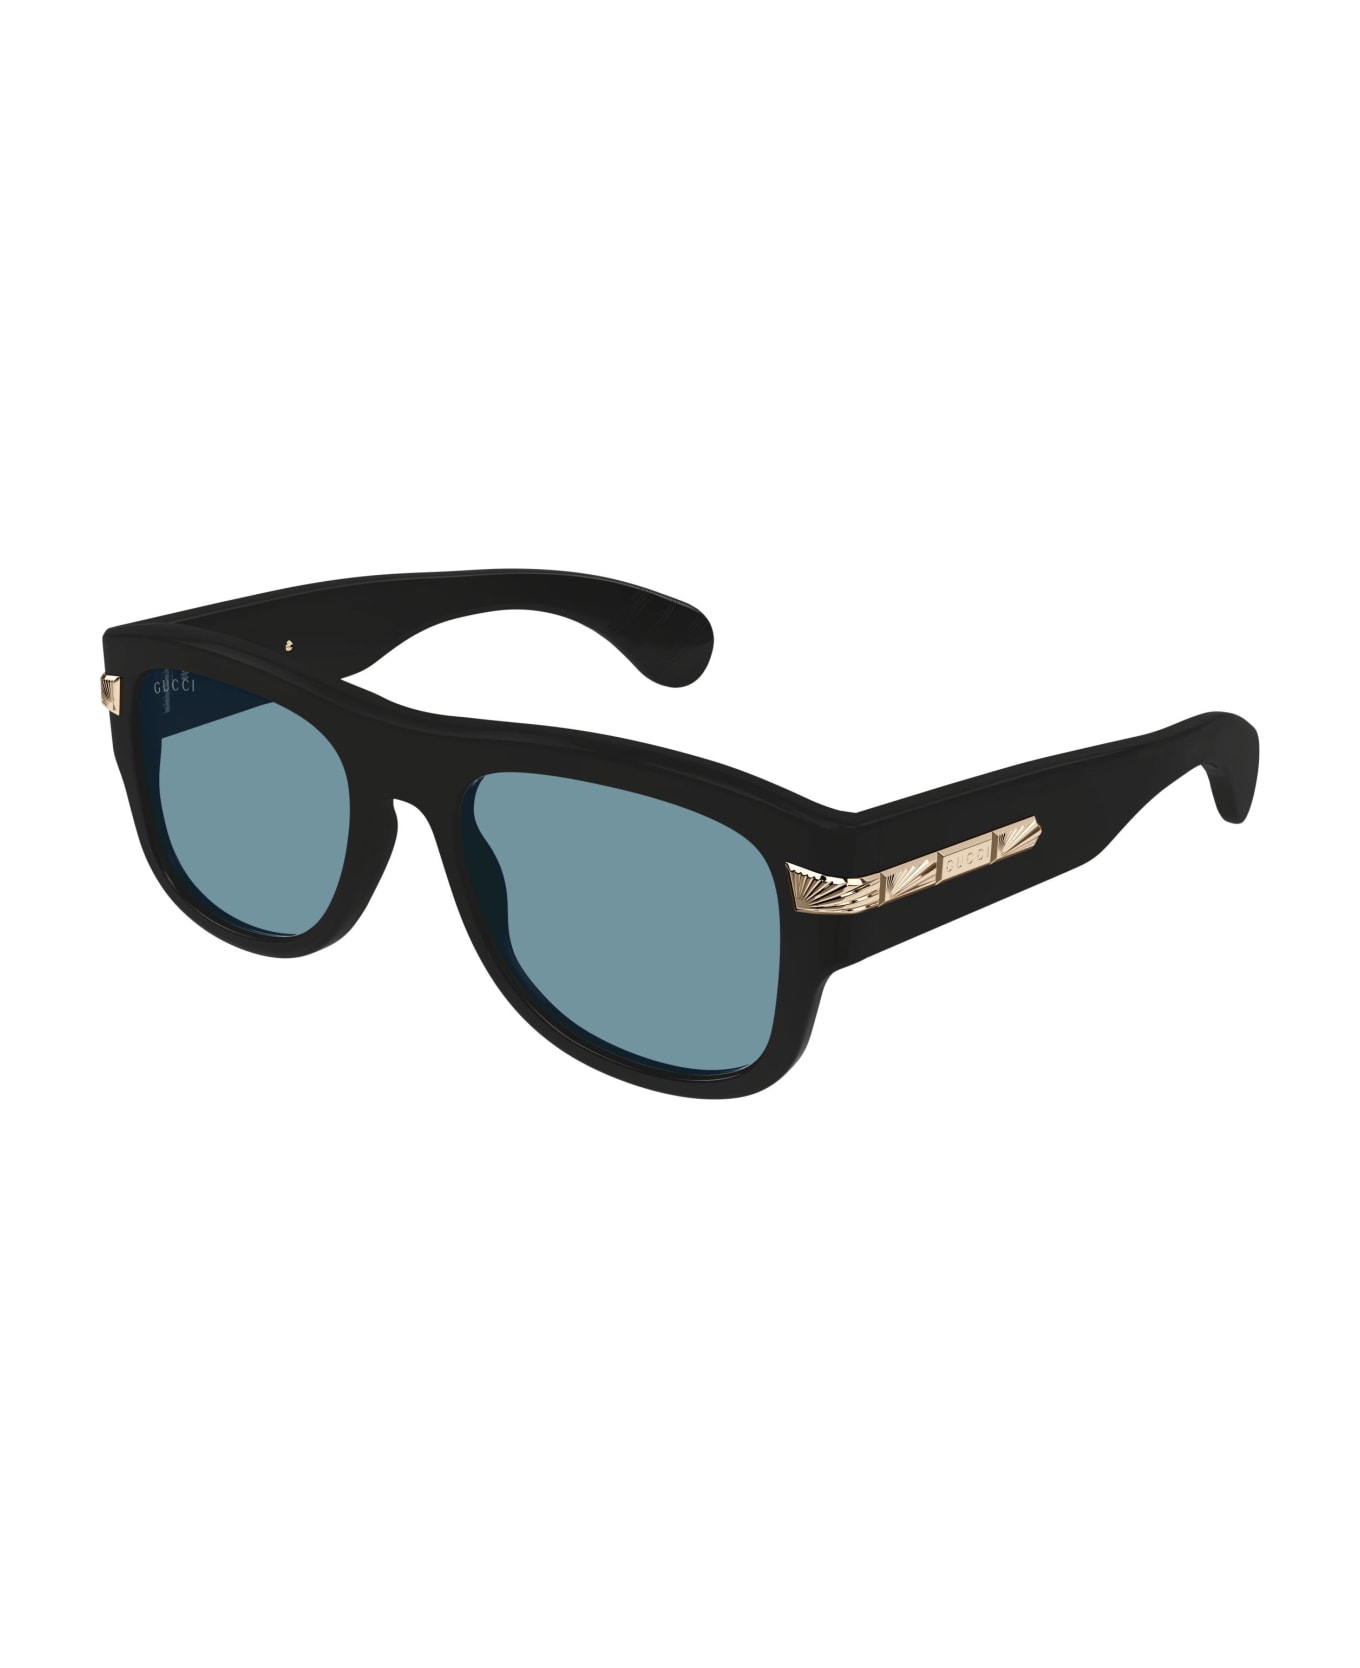 Gucci Eyewear Sunglasses - Nero/Blu サングラス